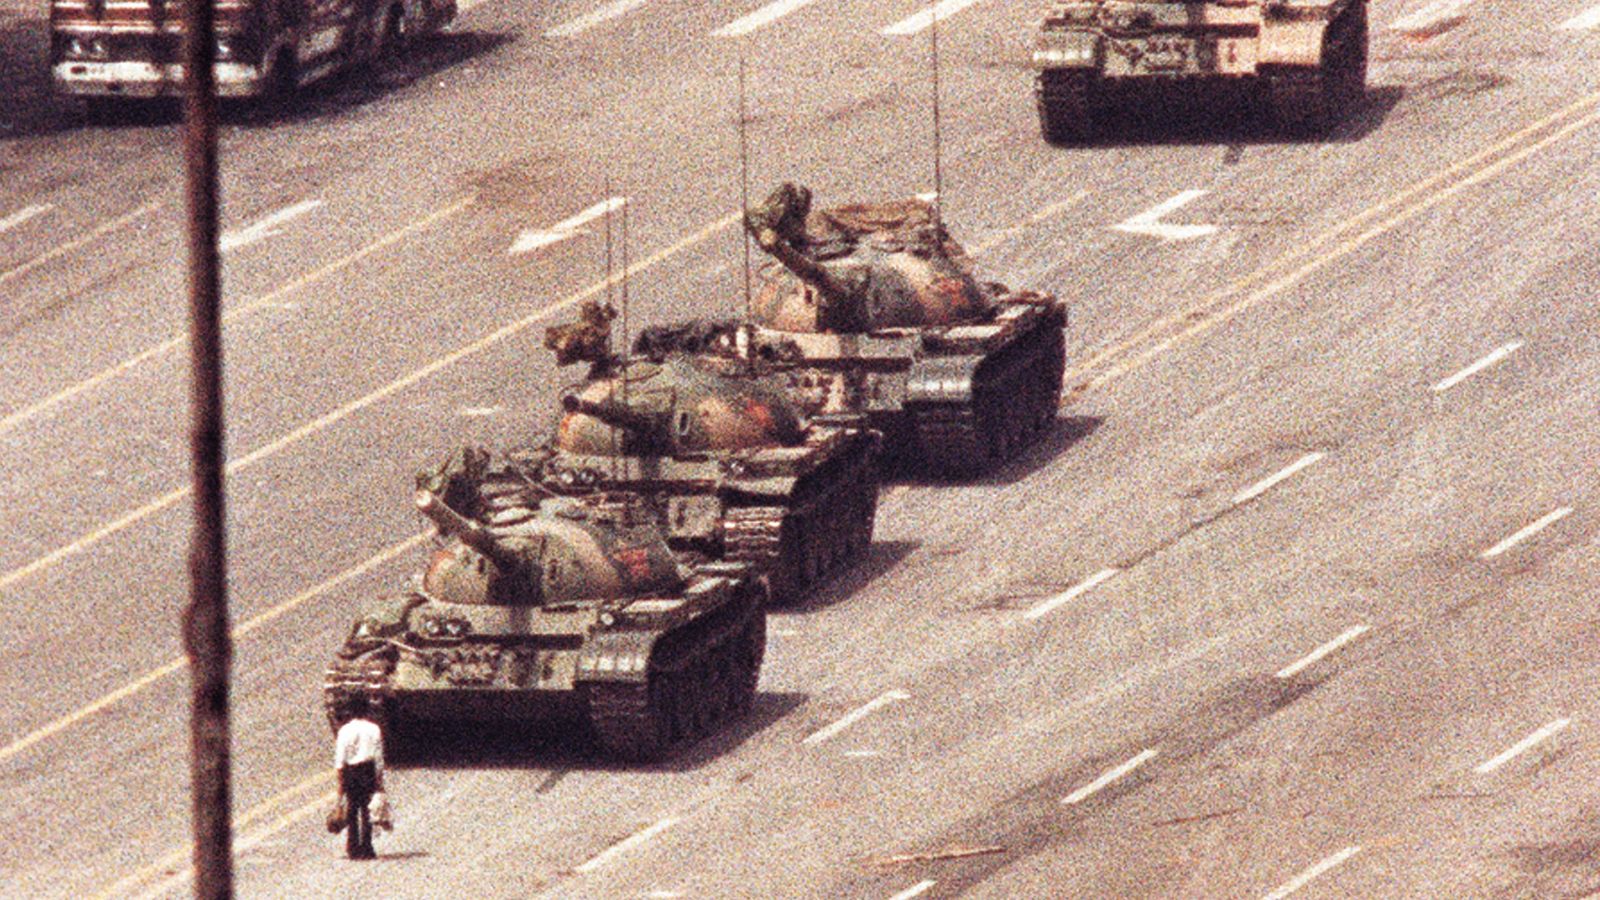 Microsoft blames 'accidental human error' for Tank Man censorship on Tiananmen Square anniversary